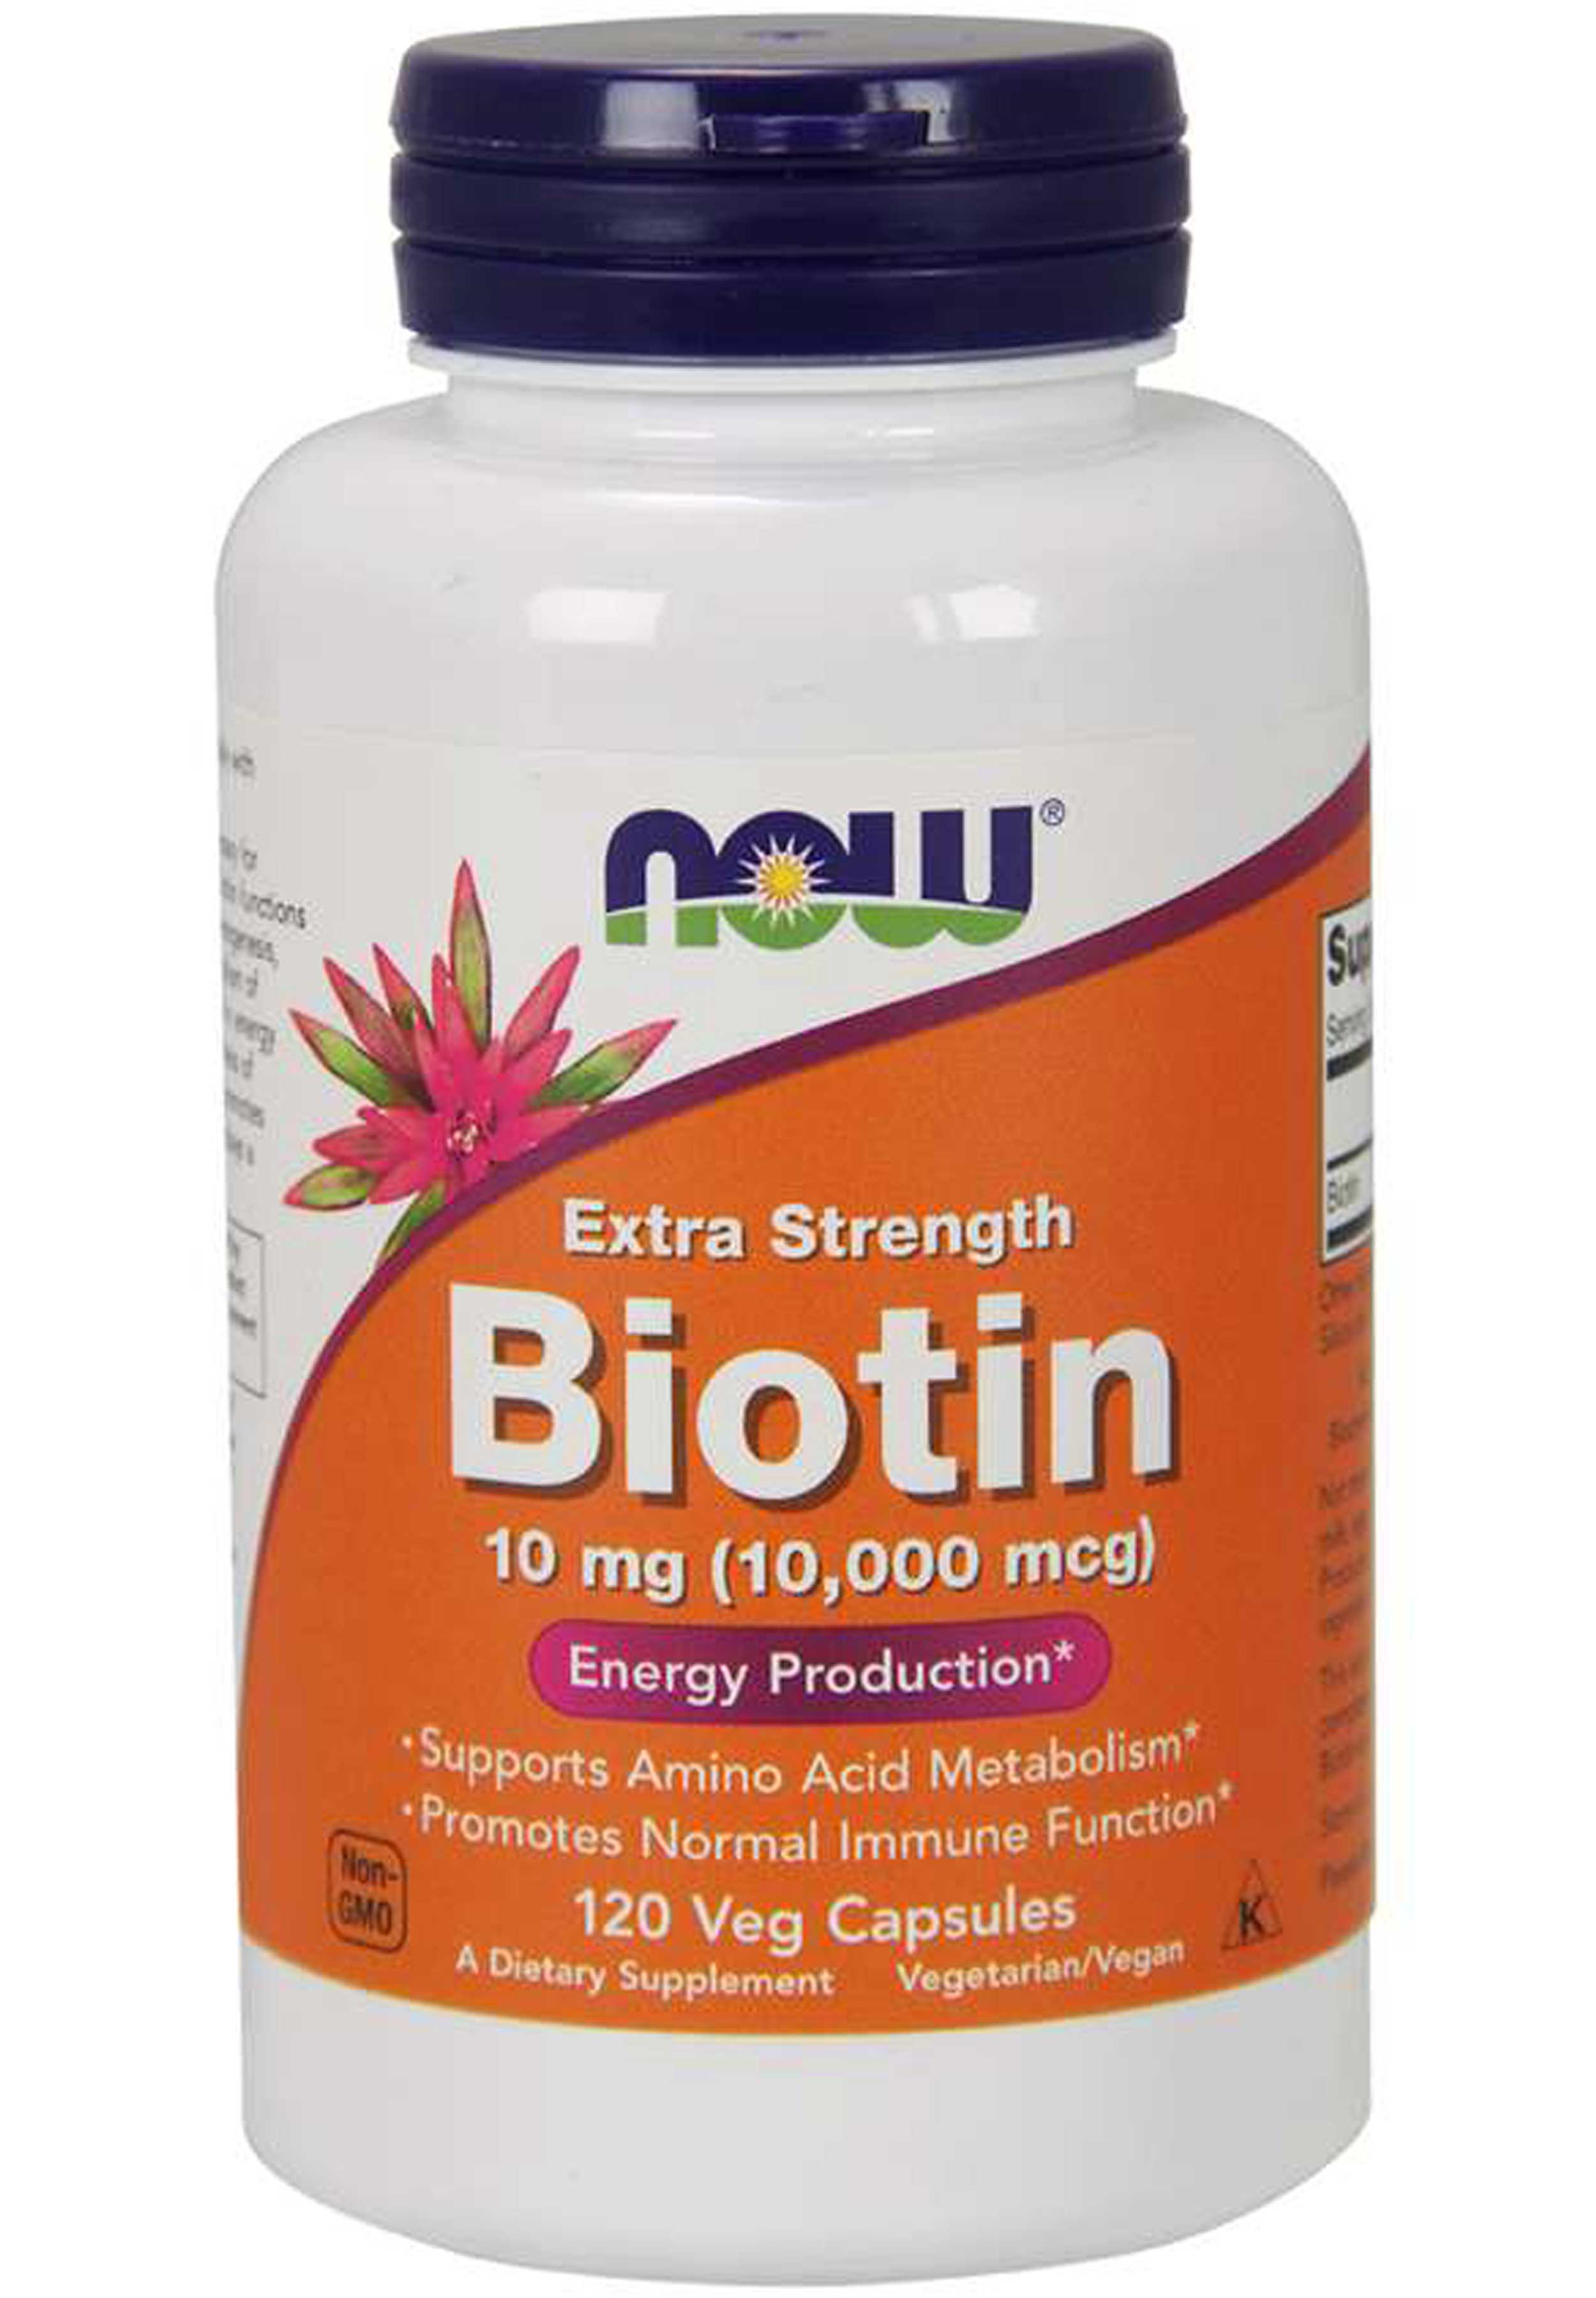 NOW Extra Strength Biotin 10mg